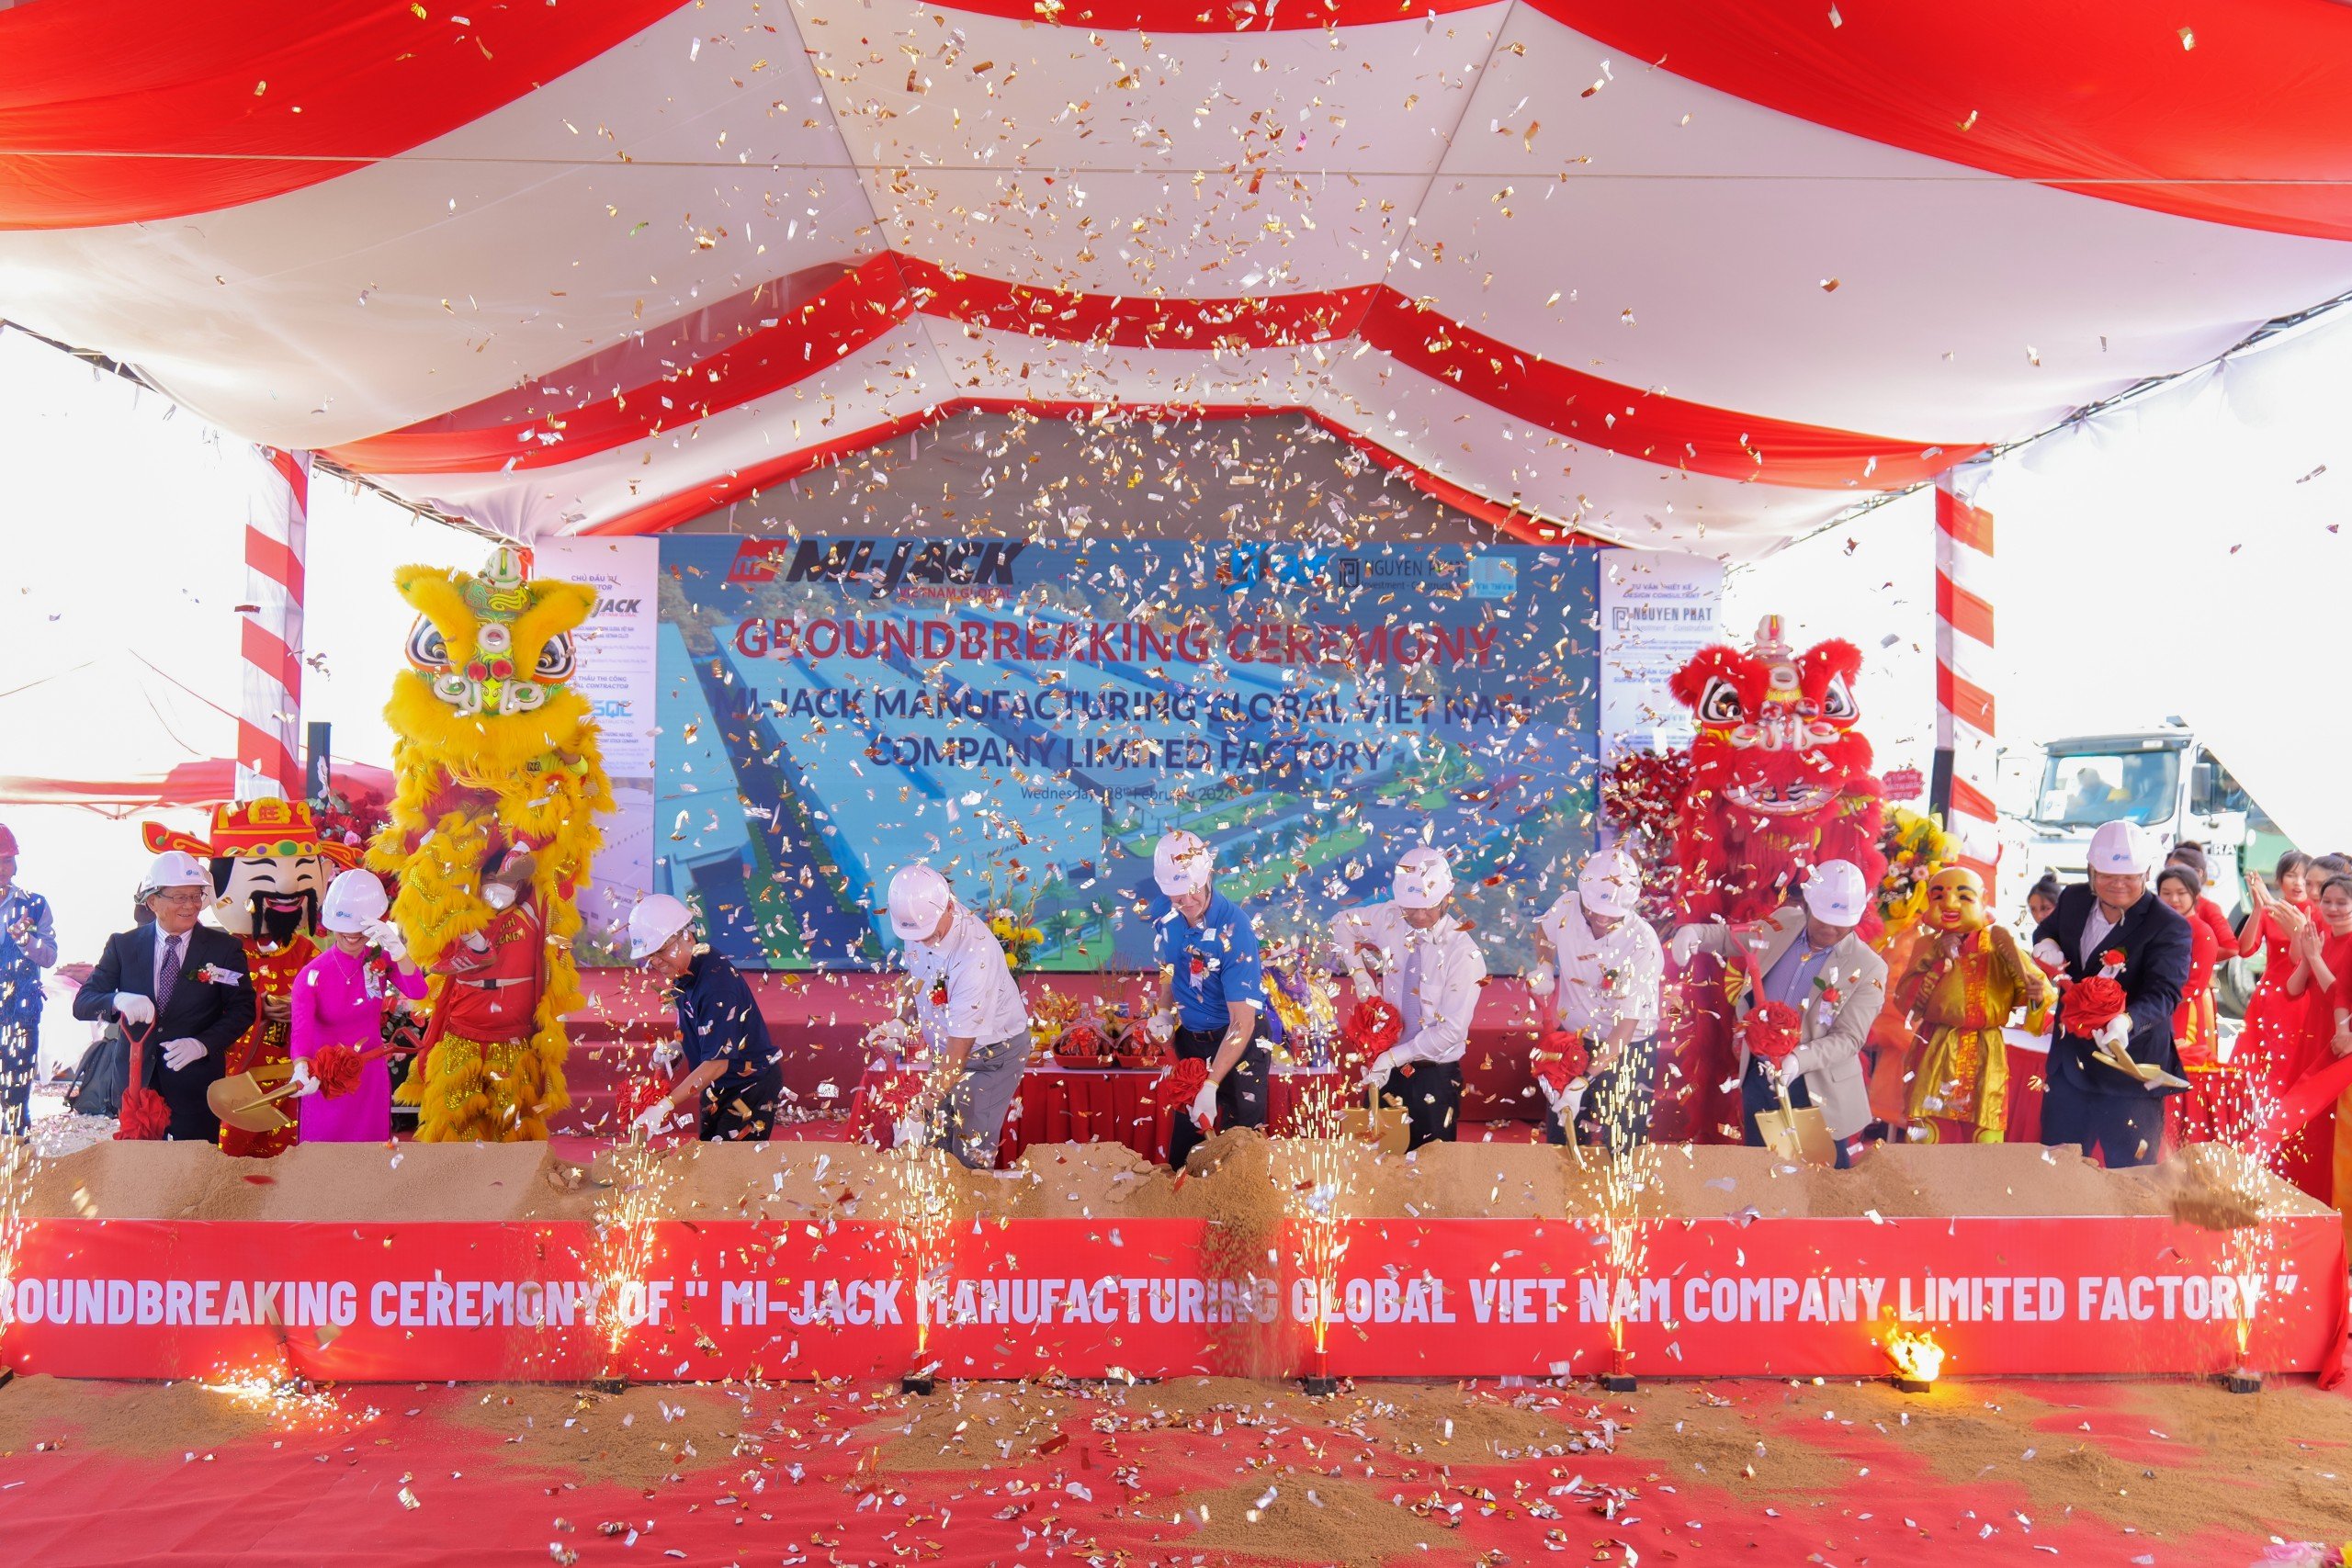 Groundbreaking Ceremony of Mi-Jack Manufacturing Global Vietnam Co.,Ltd